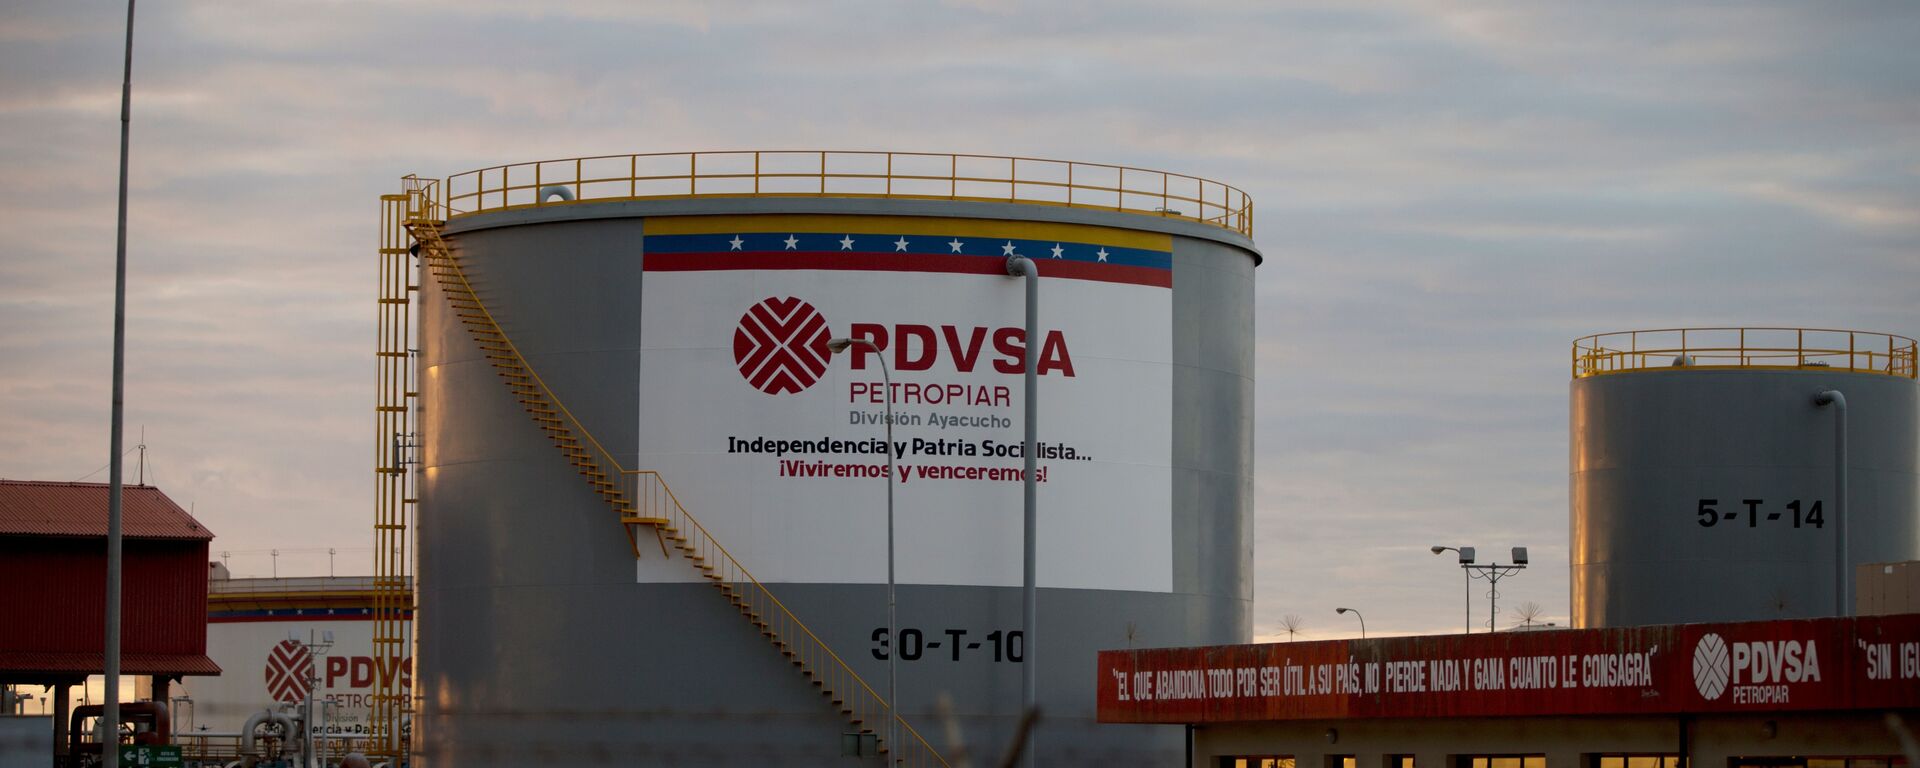 Depósitos de armazenamento de petróleo da PDVSA (Petróleos de Venezuela, S.A.) (foto de arquivo) - Sputnik Brasil, 1920, 17.06.2022